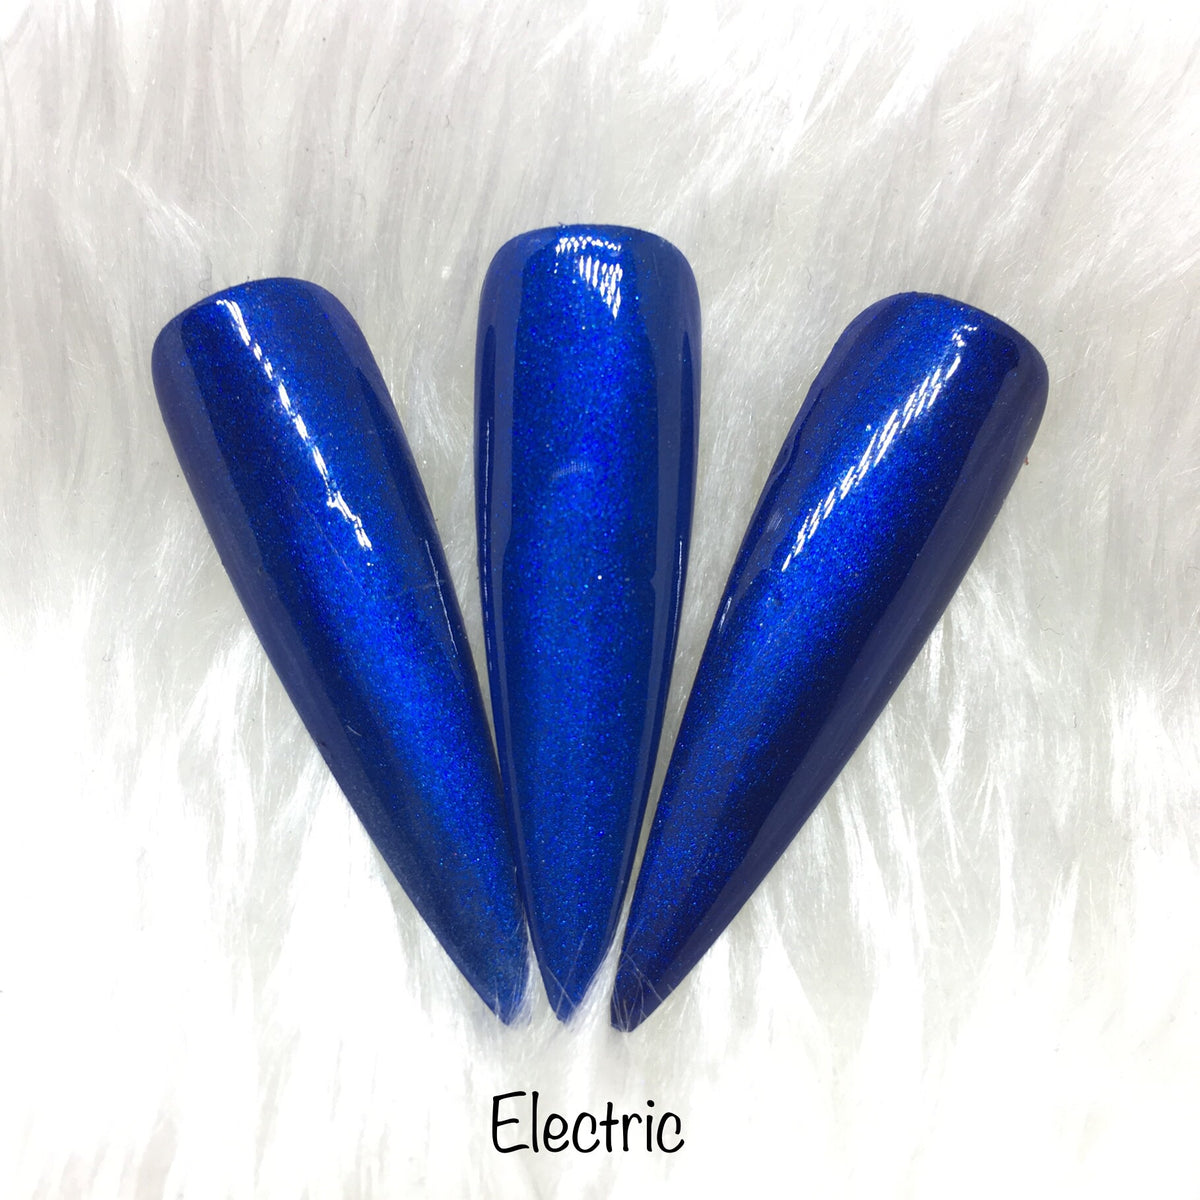 Electric-Pigments-Incandescent Shine Ltd